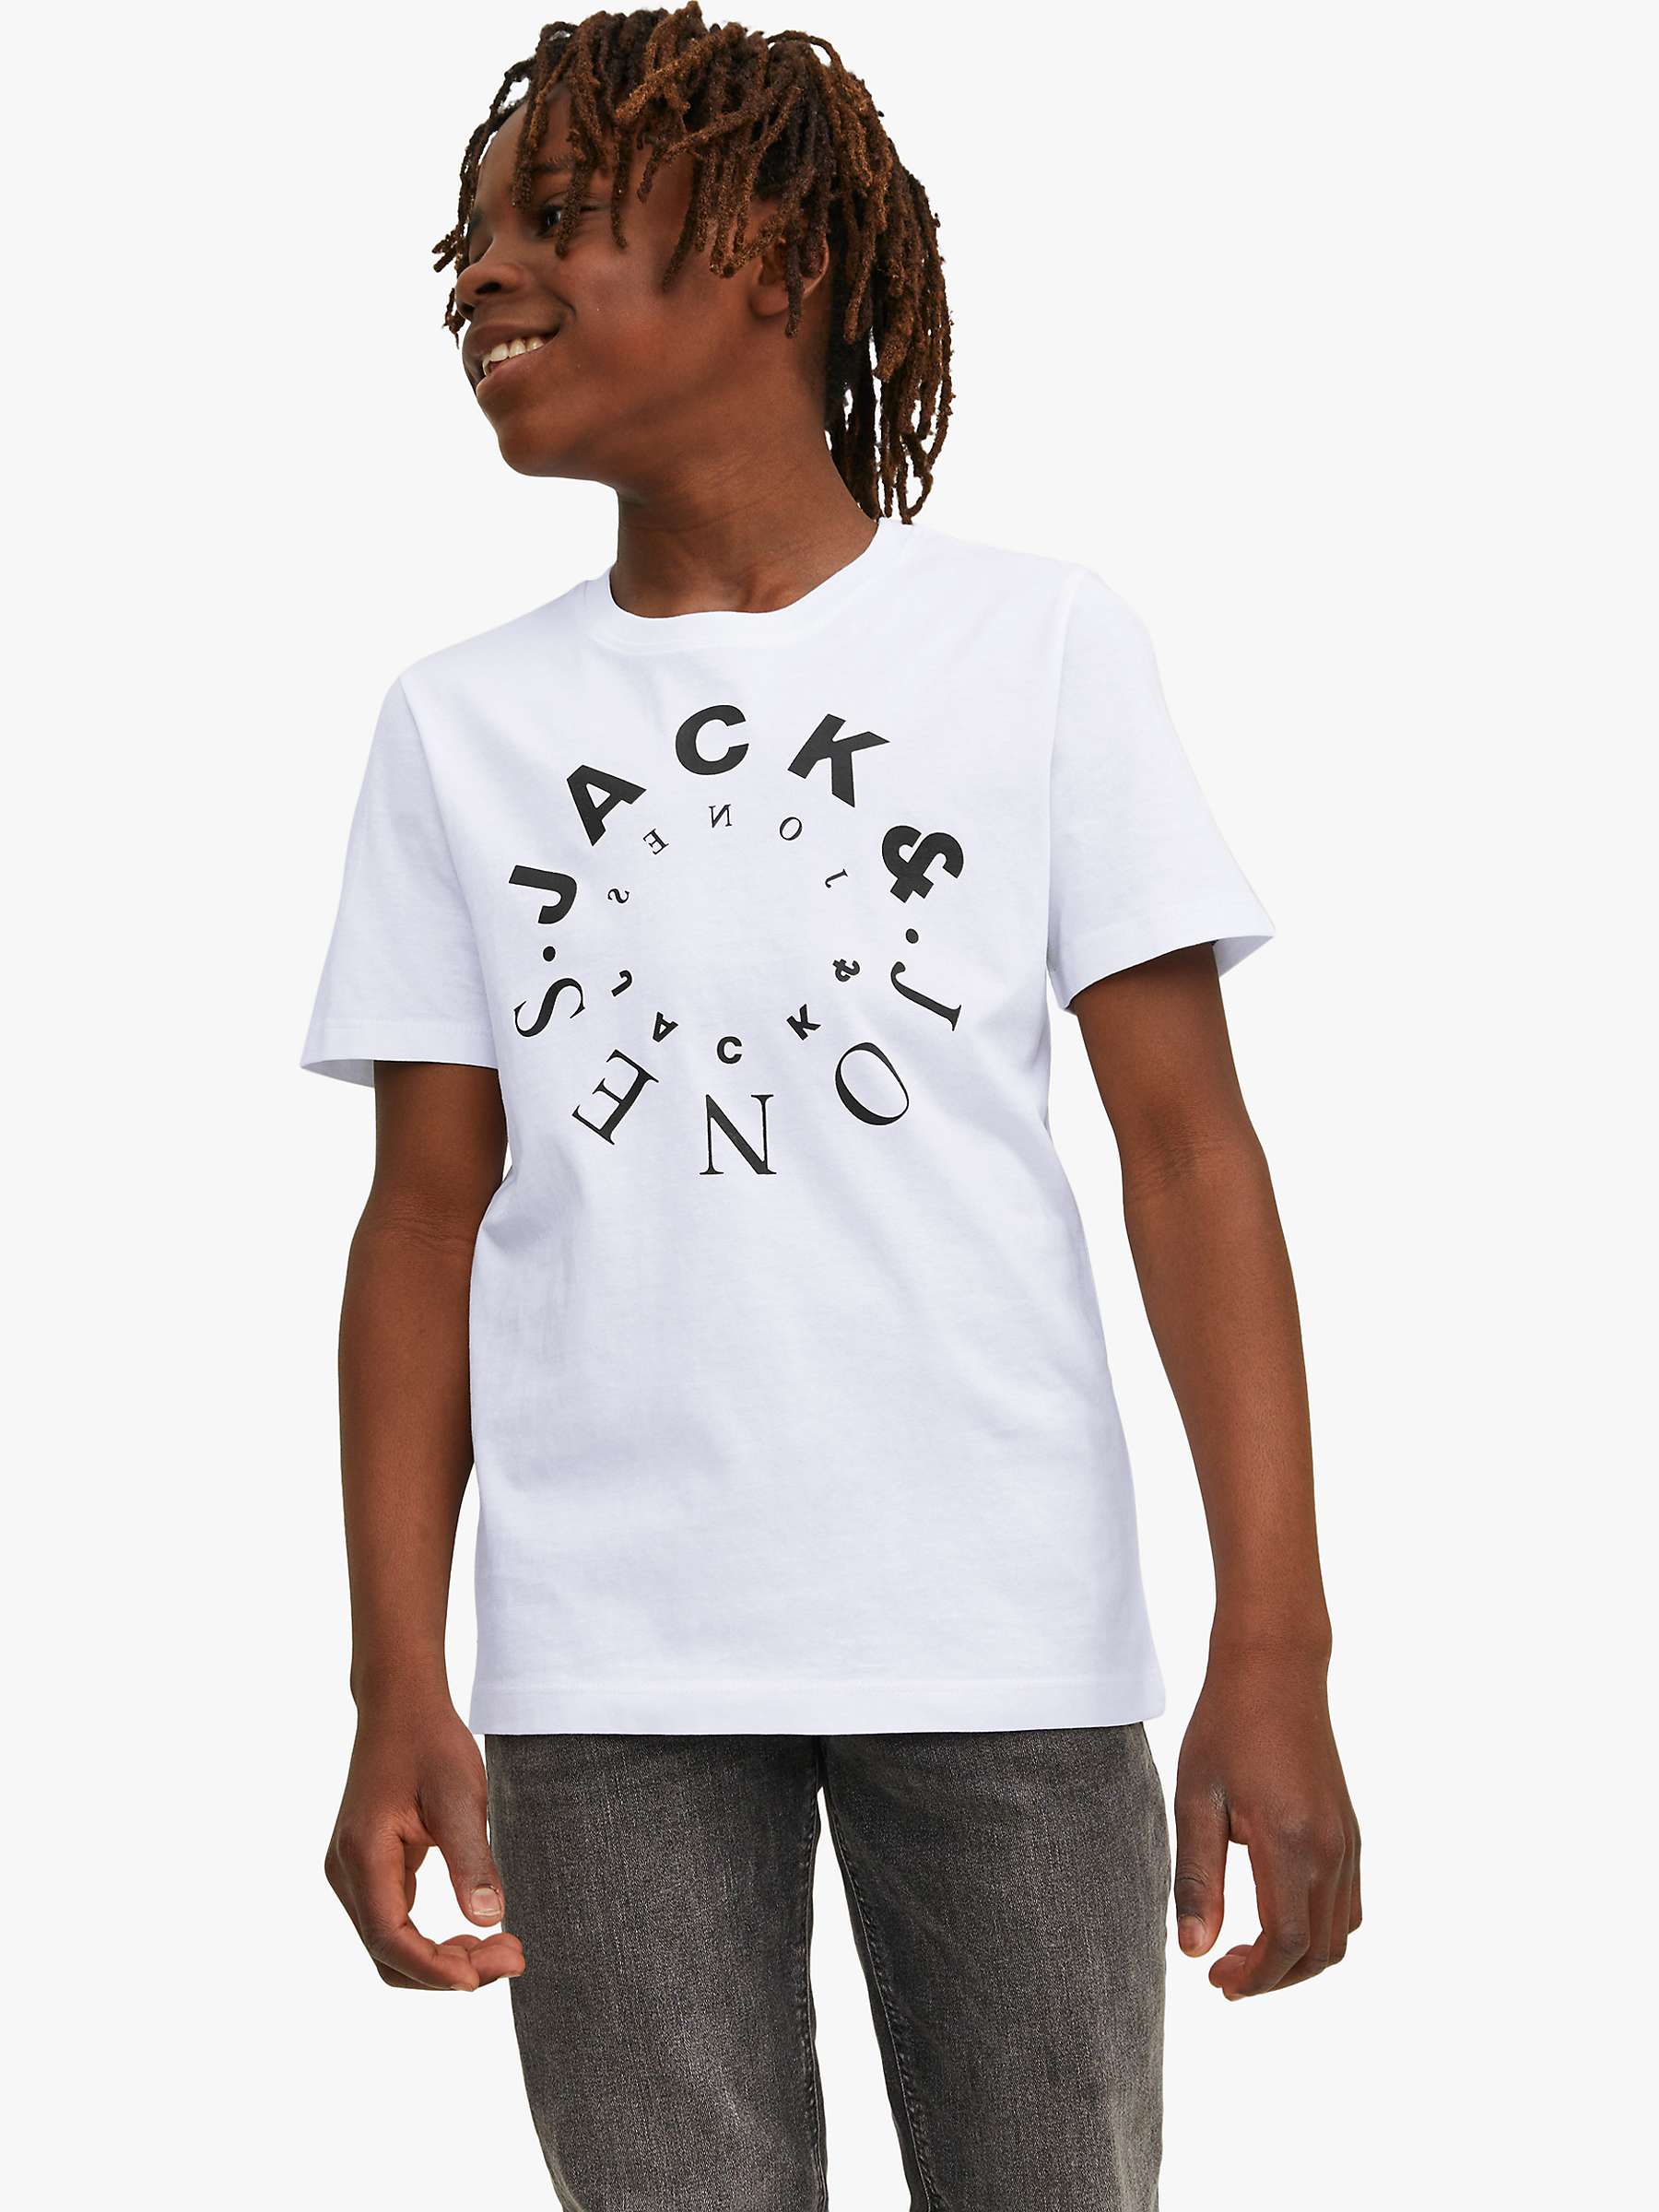 Jack & Jones Kids' Logo T-Shirt, Pack of 3, White at John Lewis & Partners